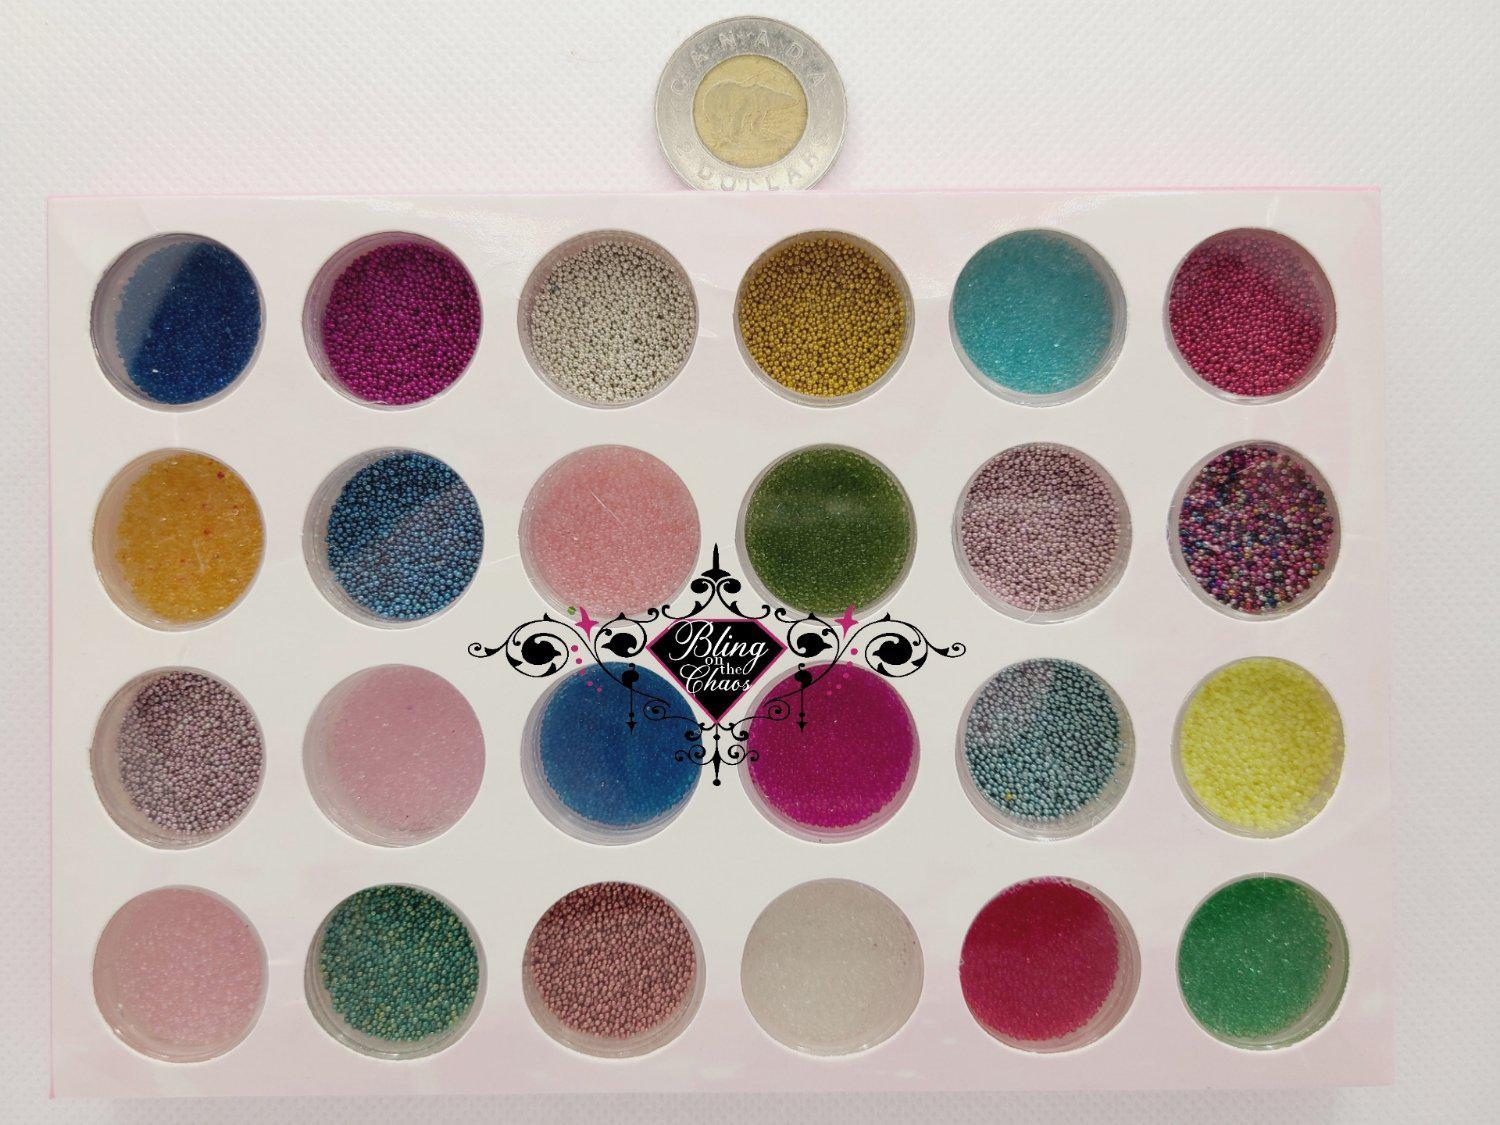 Caviar Micro-Caviar Beads-Bling on the Chaos